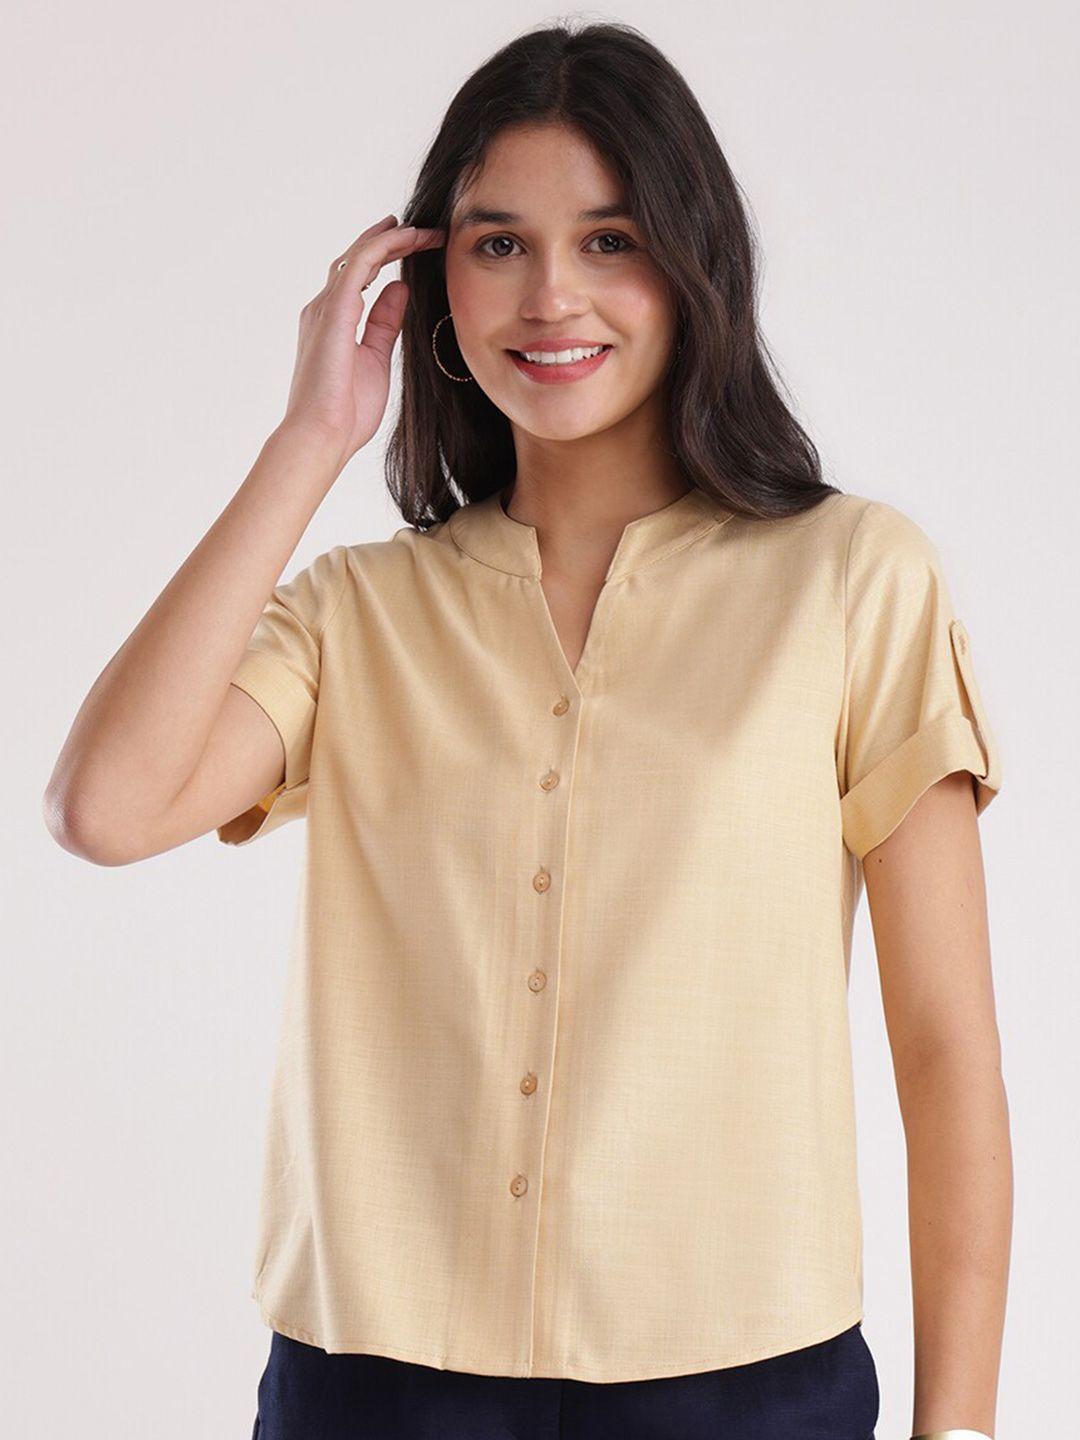 fablestreet-mandarin-collar-shirt-style-top